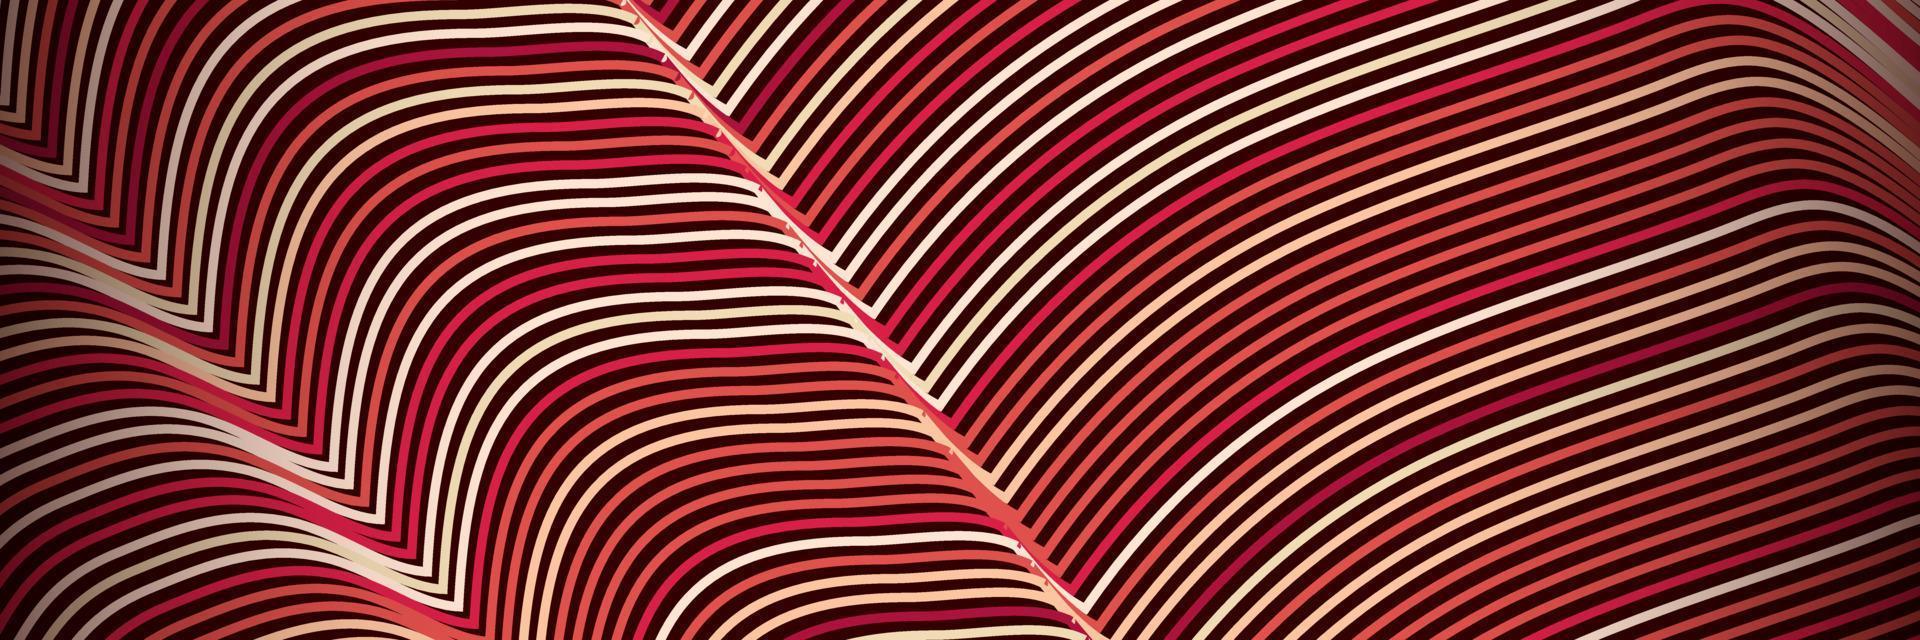 banner våg linjer mönster en abstrakt randig bakgrund, vektor